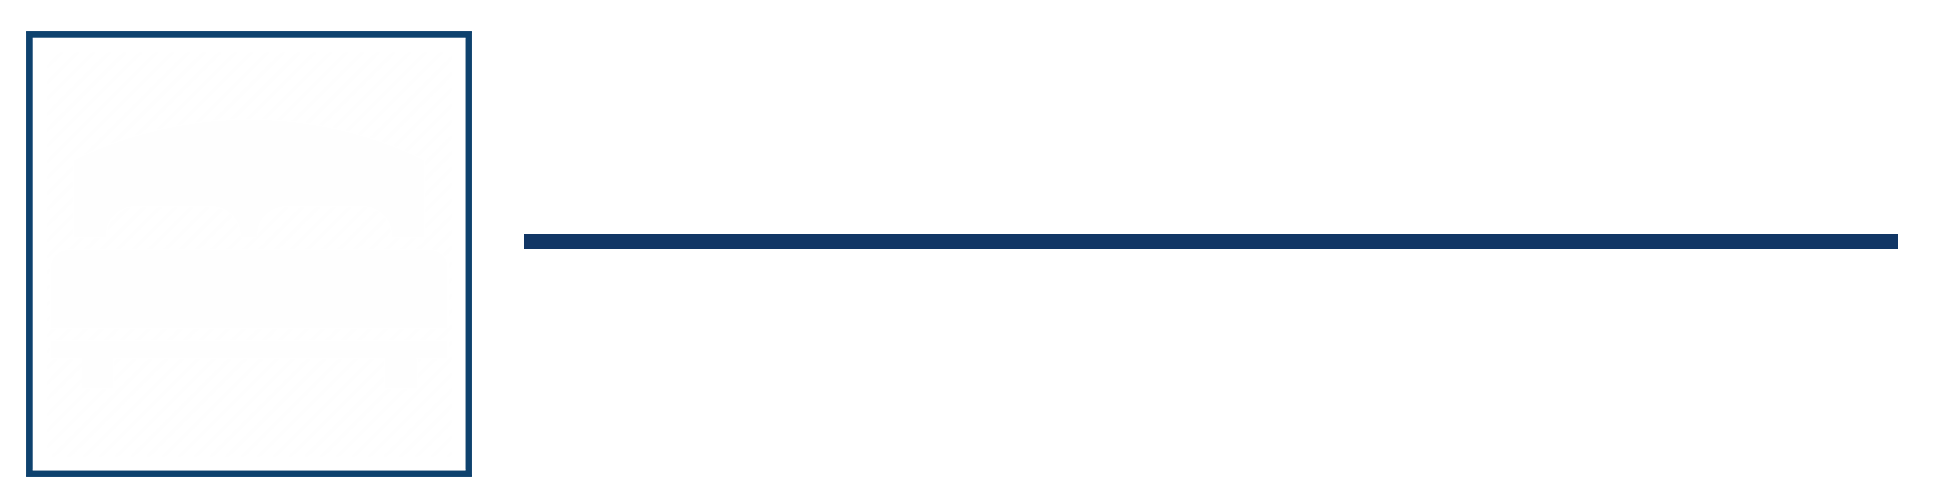 Mattress Direct America